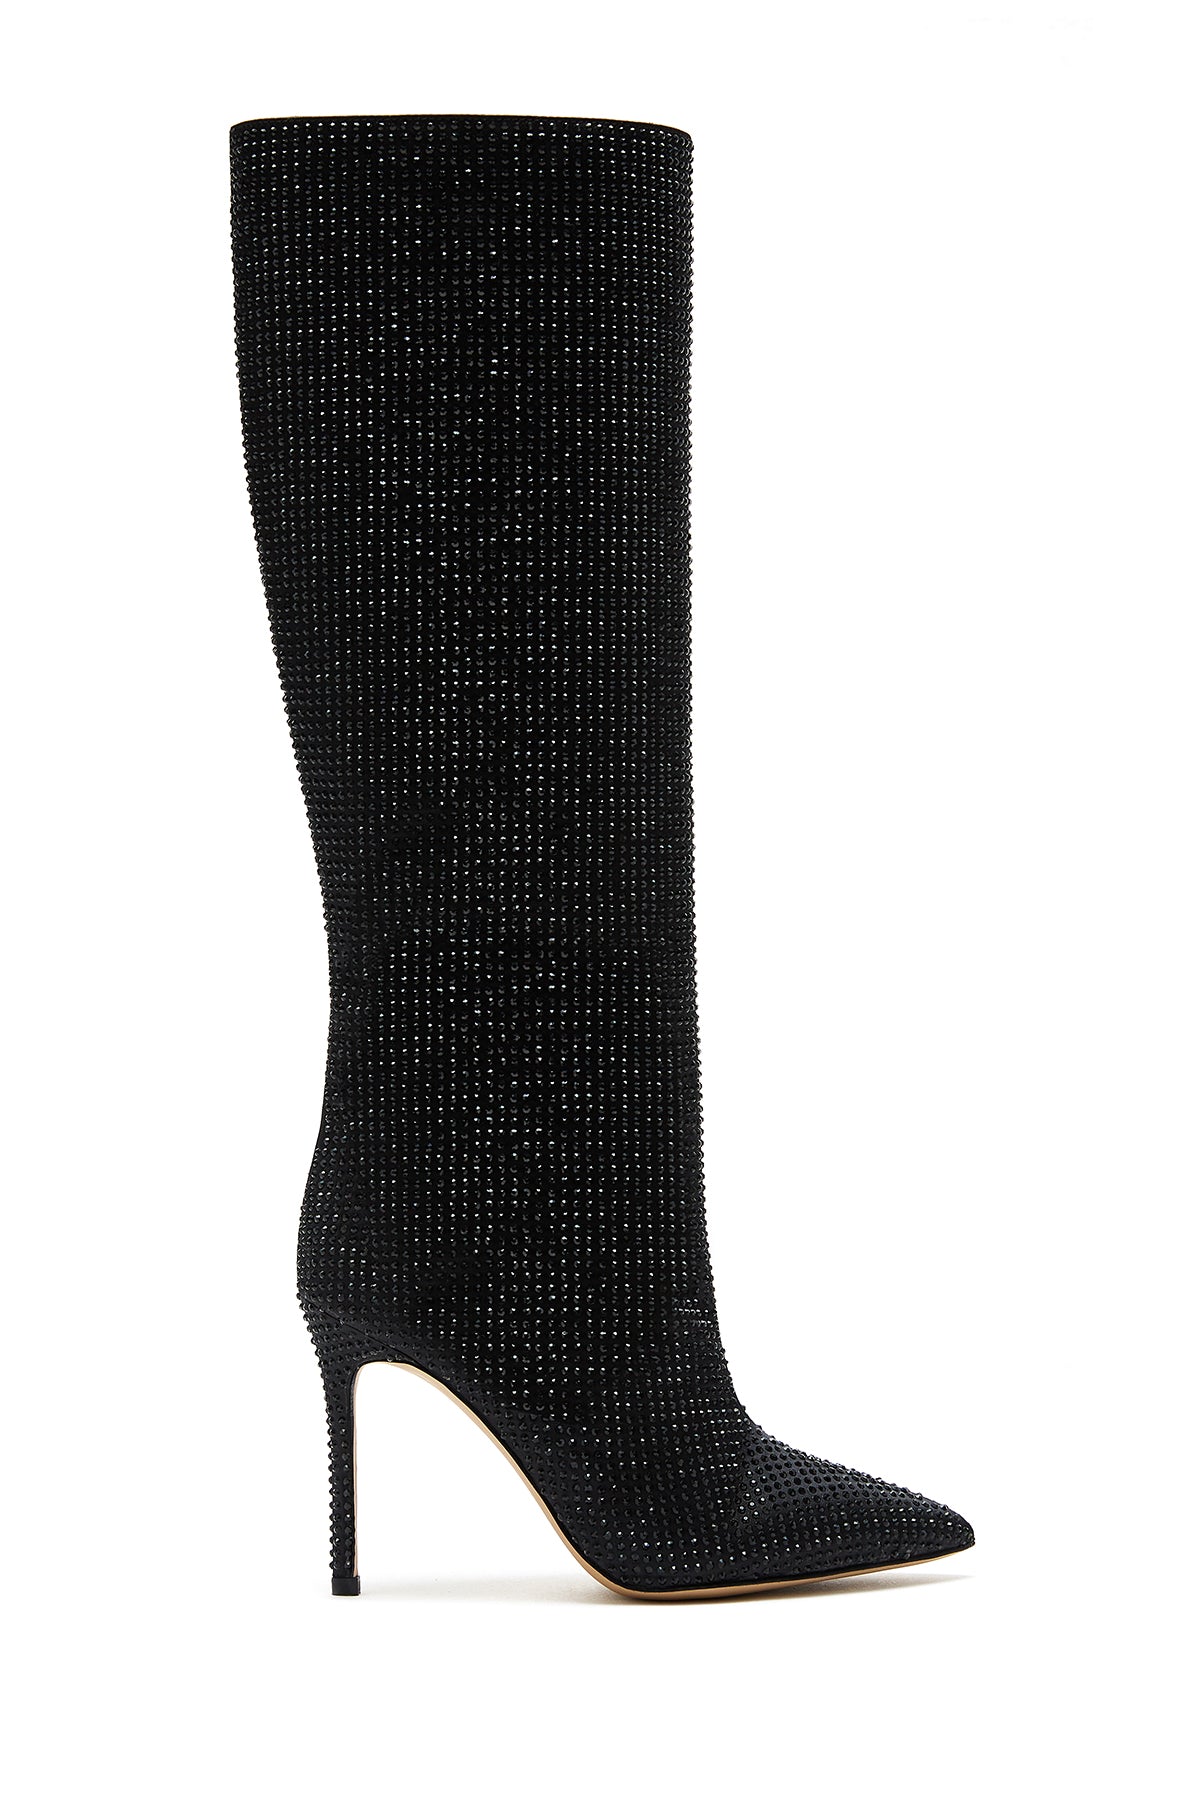 Kadın Siyah Kroko Deri Topuklu Çizme